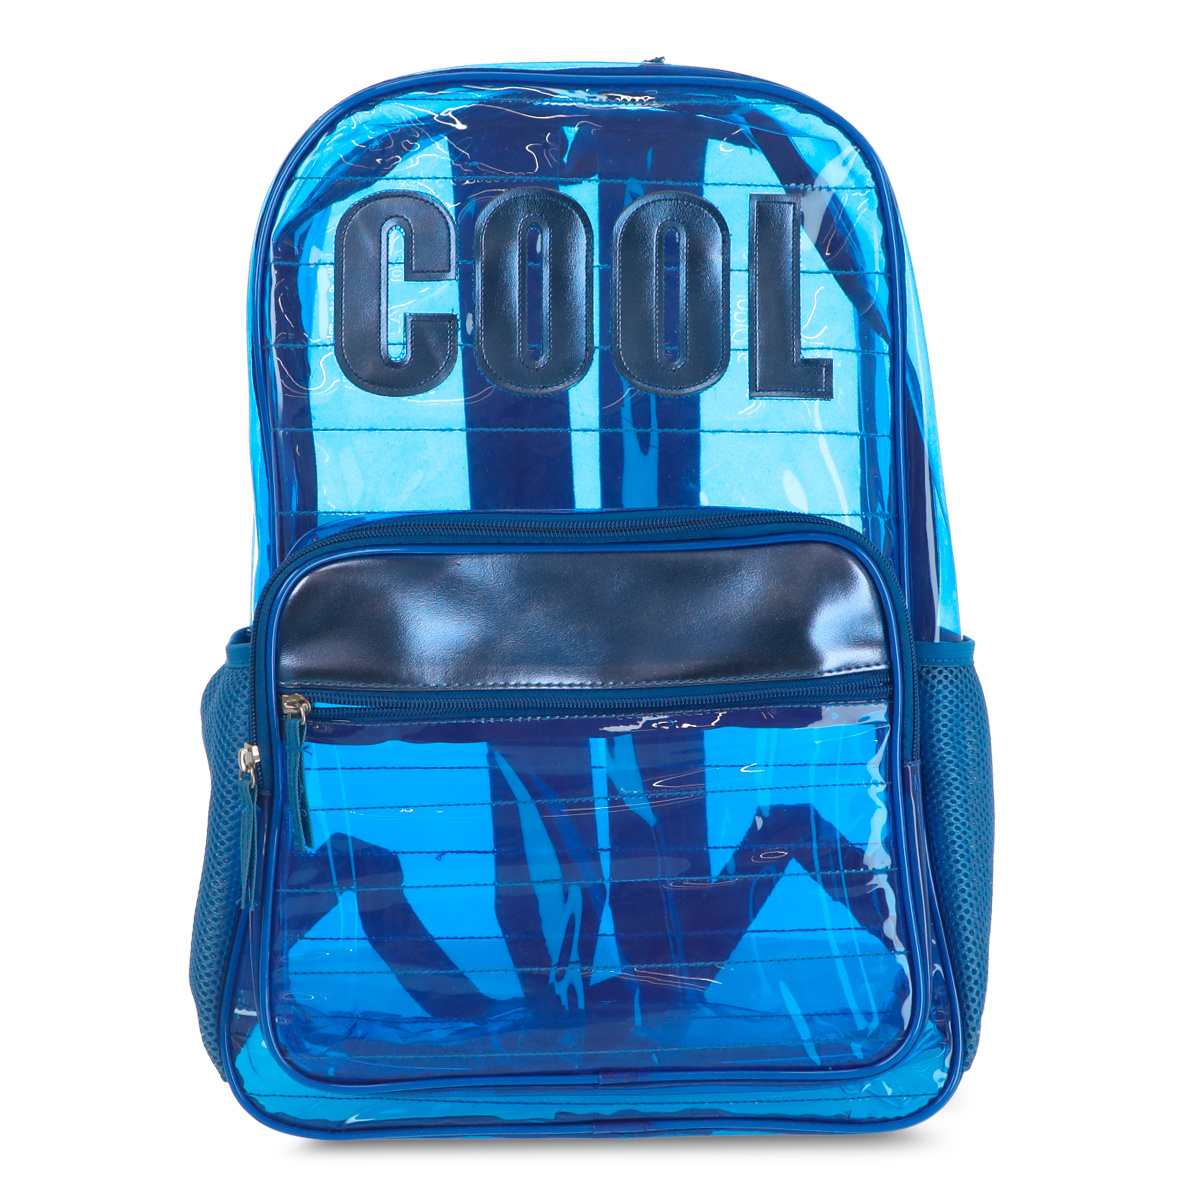 Mochila Escolar Ticher Cool Azul Transparente